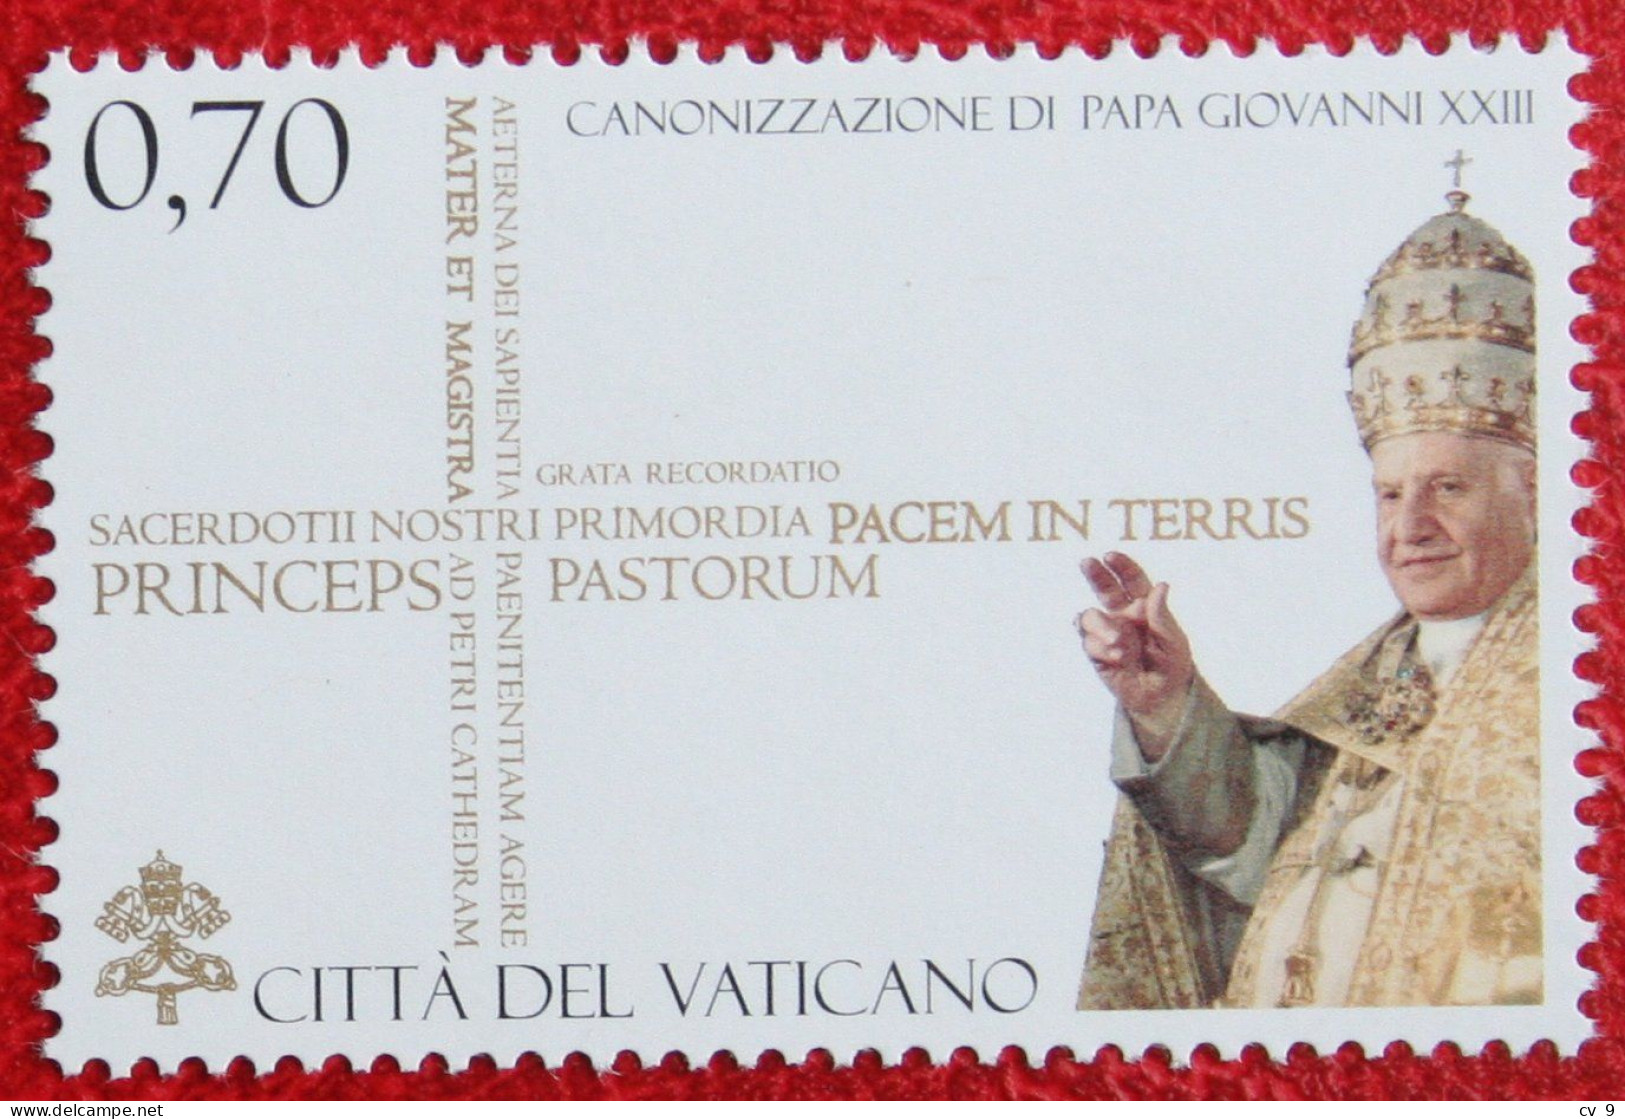 Canonification Of Pope John XXIII  2014 Mi 1799 Yv 1653 POSTFRIS / MNH / ** VATICANO VATICAN - Unused Stamps